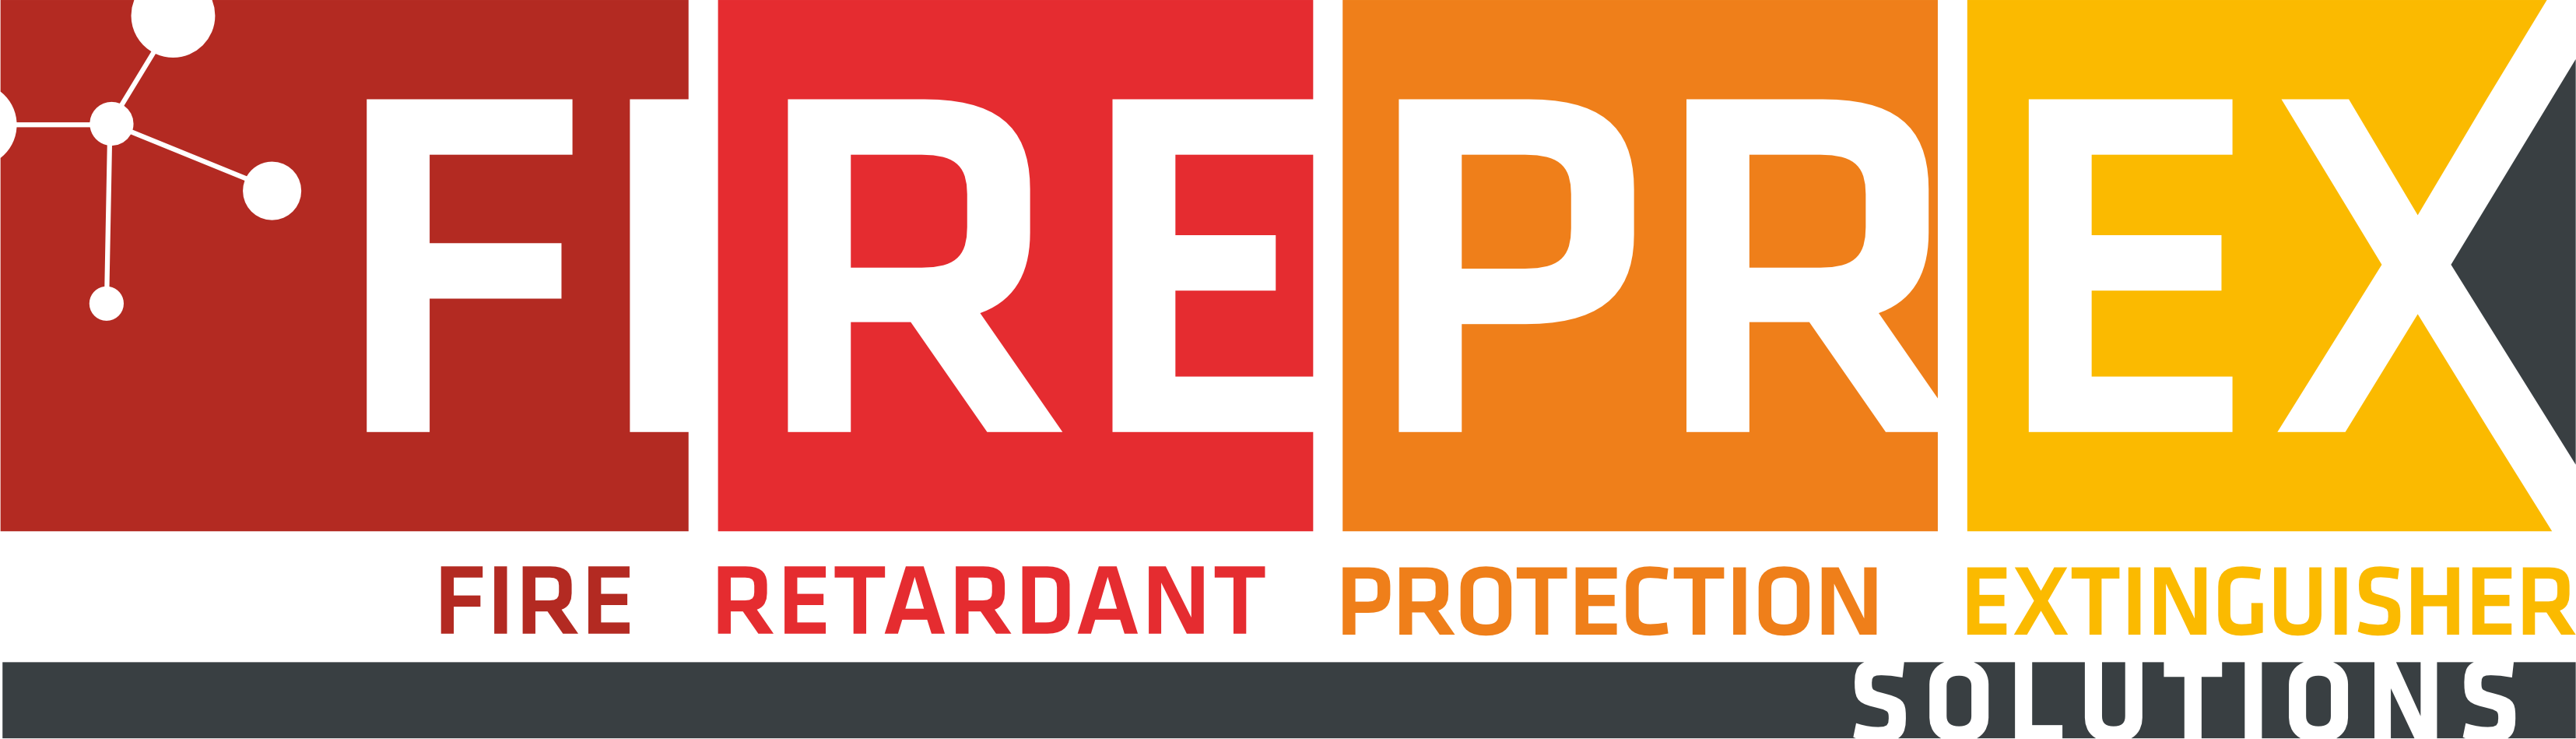 Fireprex FIRE RETERDANT PROTECTION EXTINGUIESHER SOLUTIONS